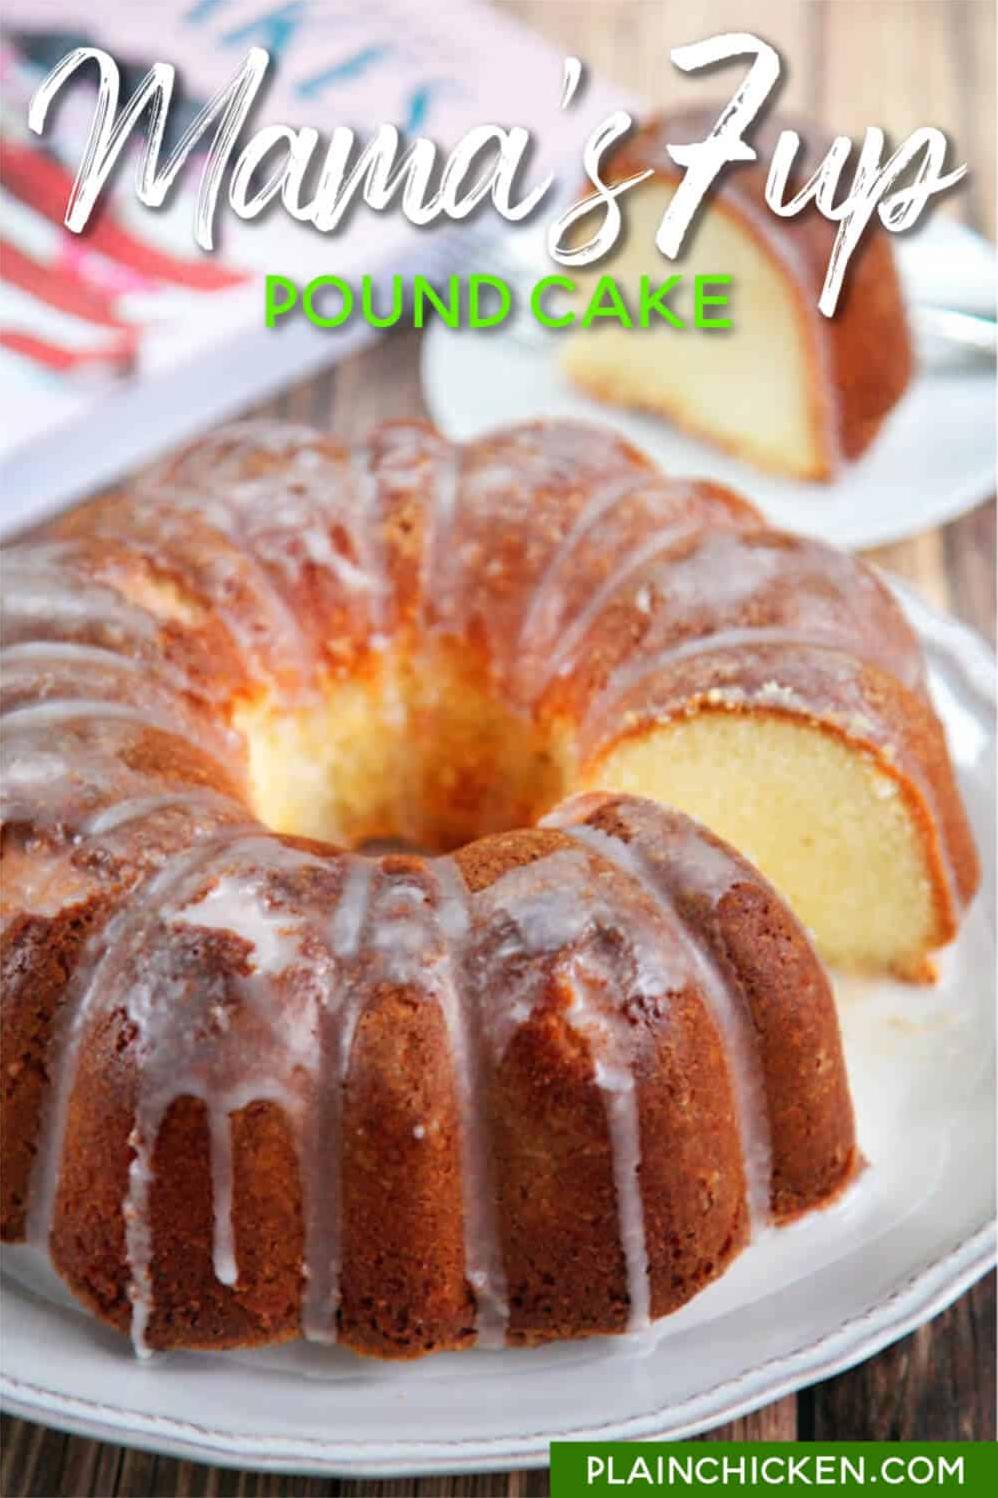 Best 7-Up Pound Cake Recipe